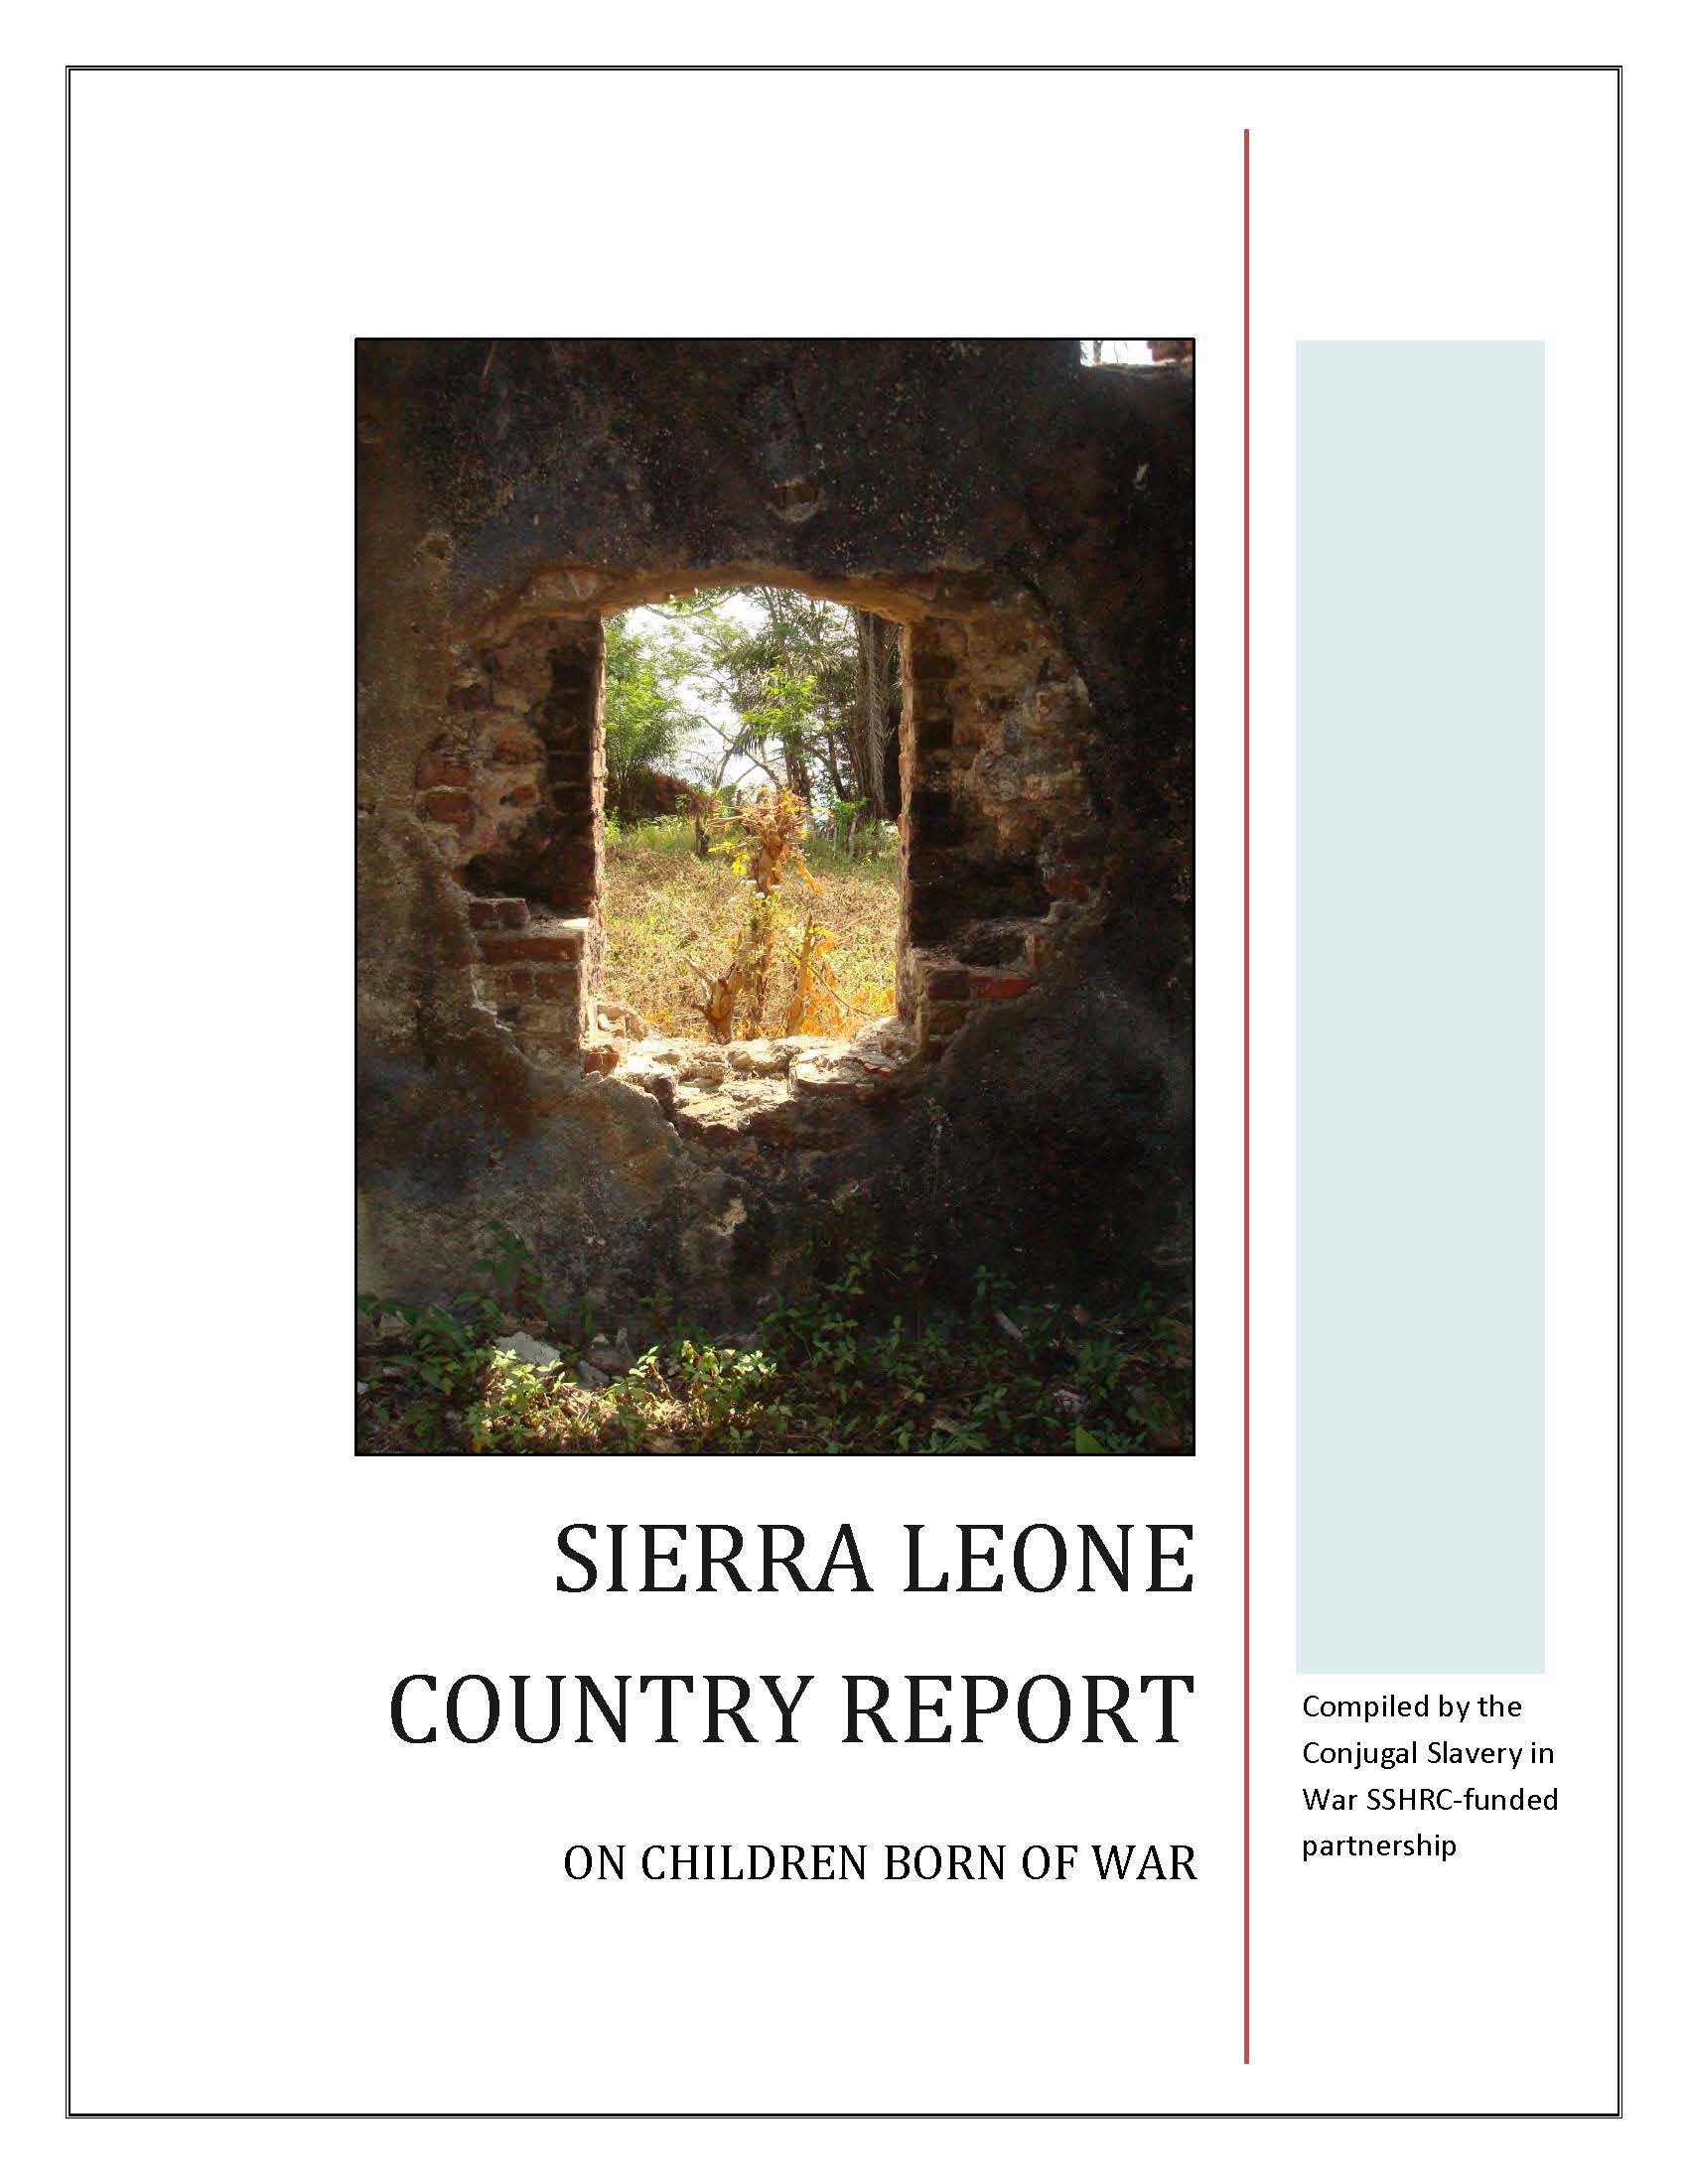 Sierra Leone Country Report on Children Born of War